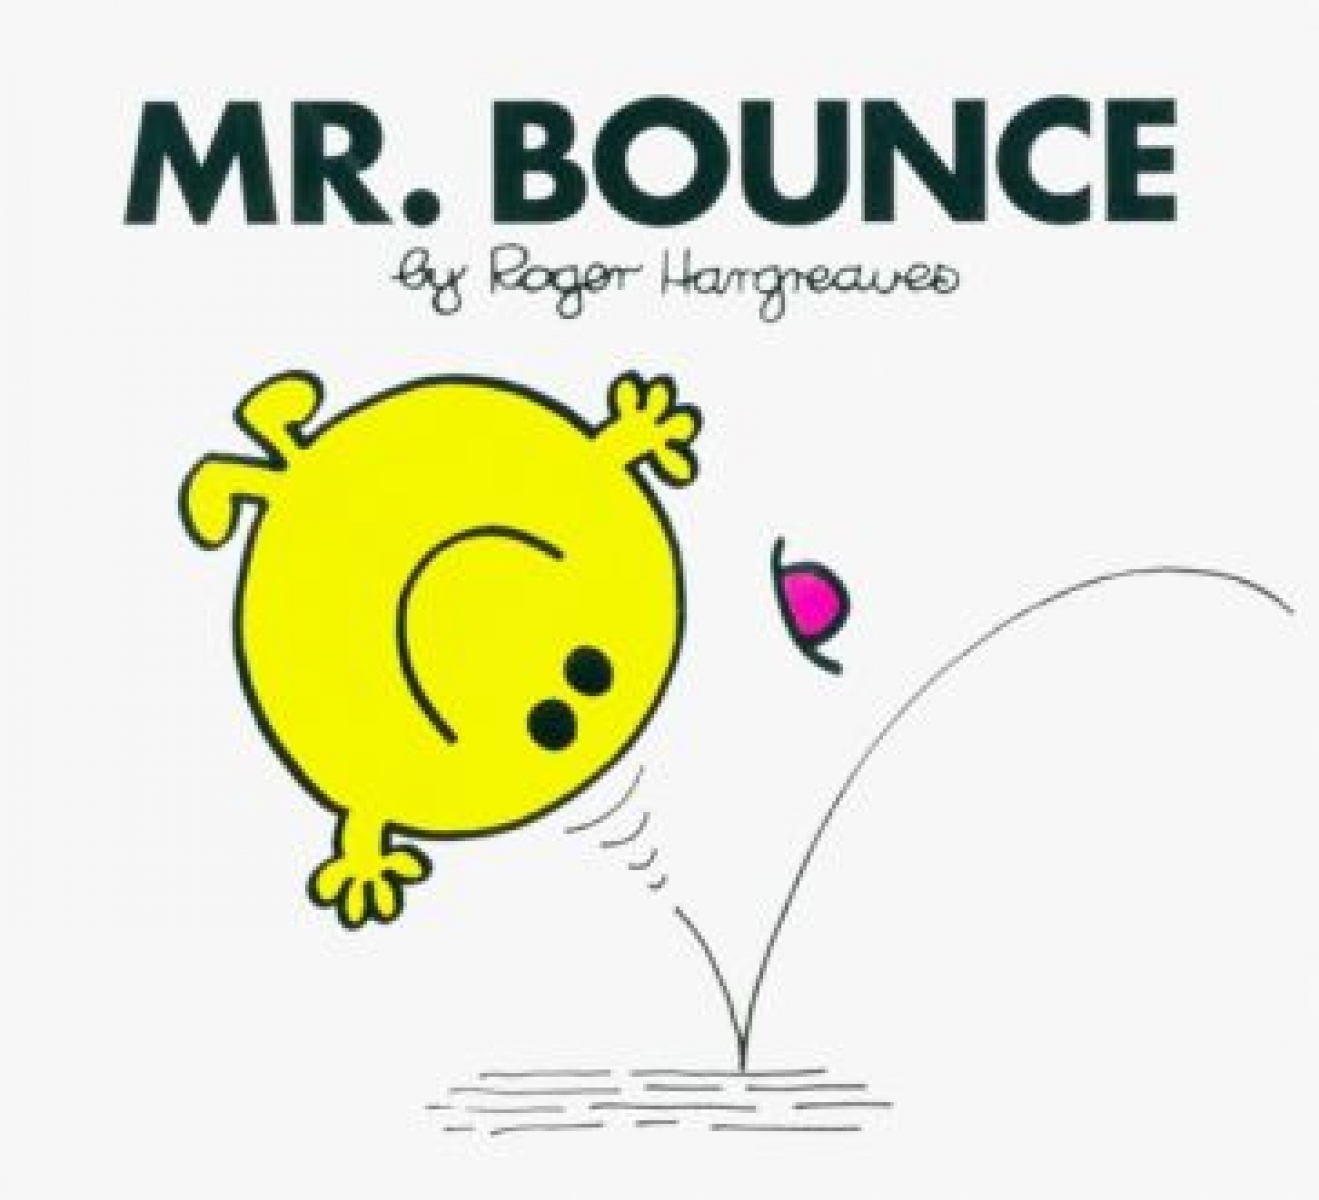 Hargreaves Roger Mr. Bounce 